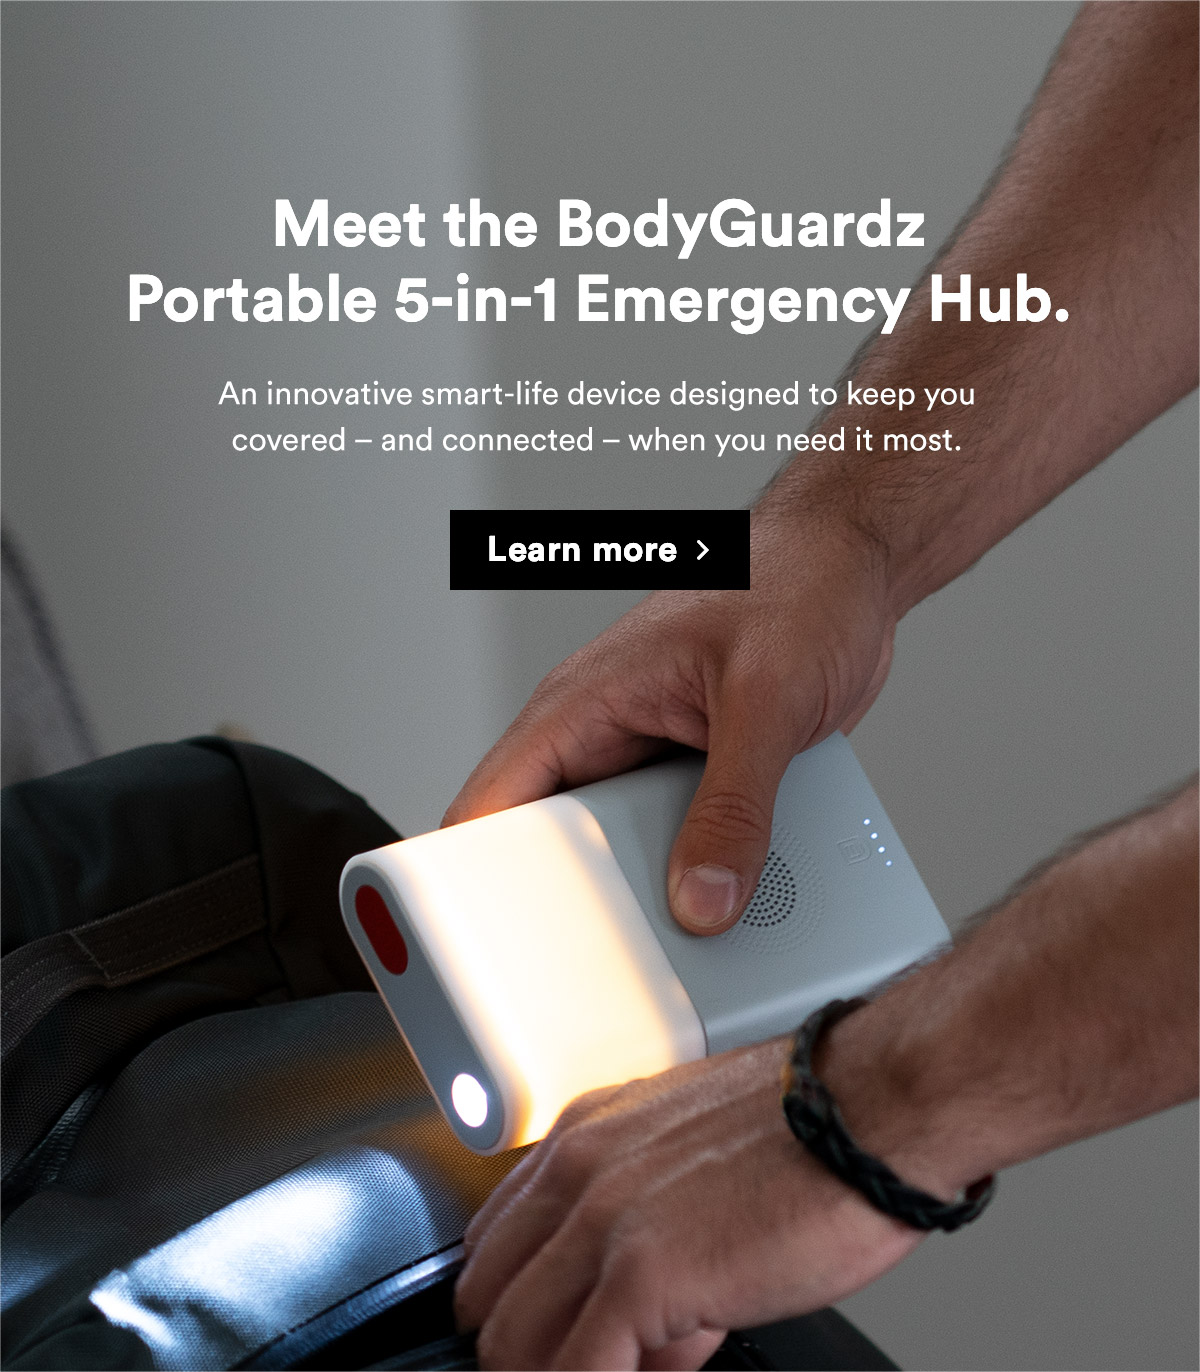 Meet the Portable 5-in-1 Emergency Hub